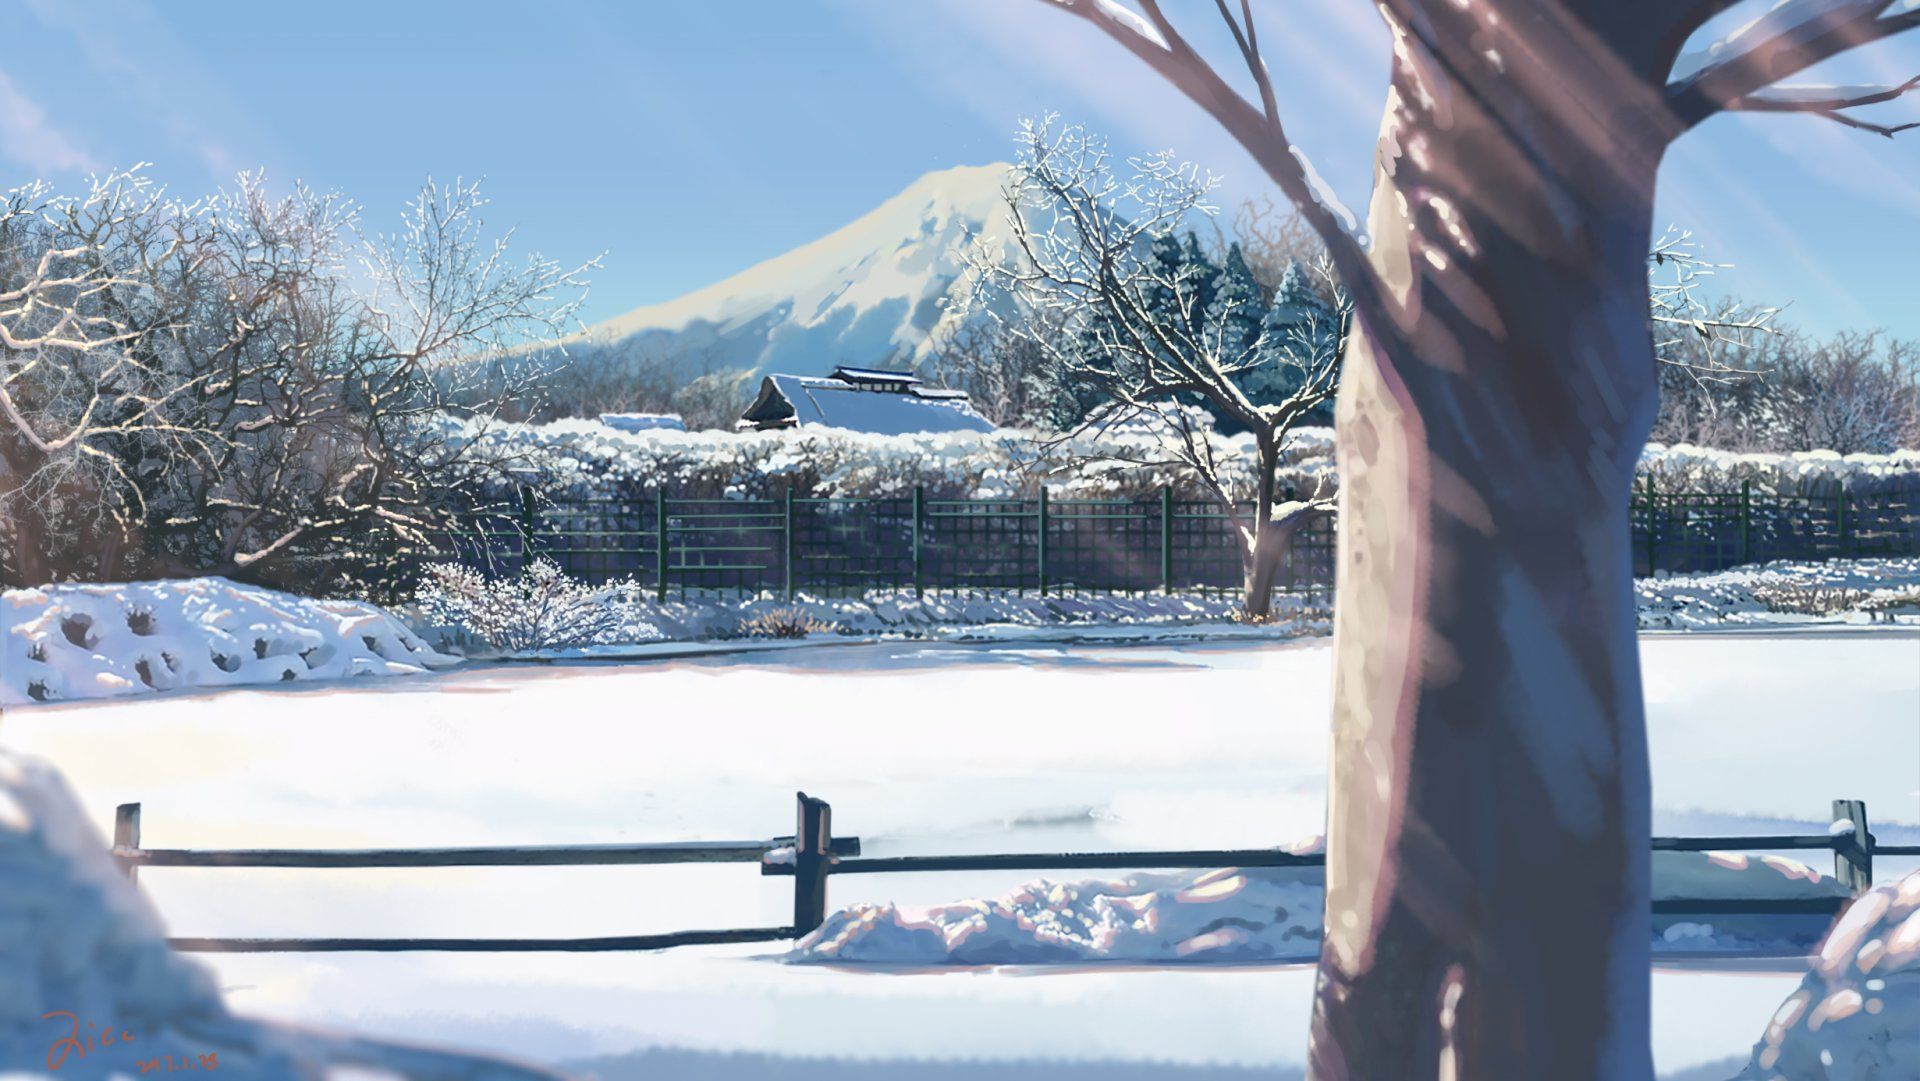 Background Image. Click pic to full HD #winteranime #winter #art